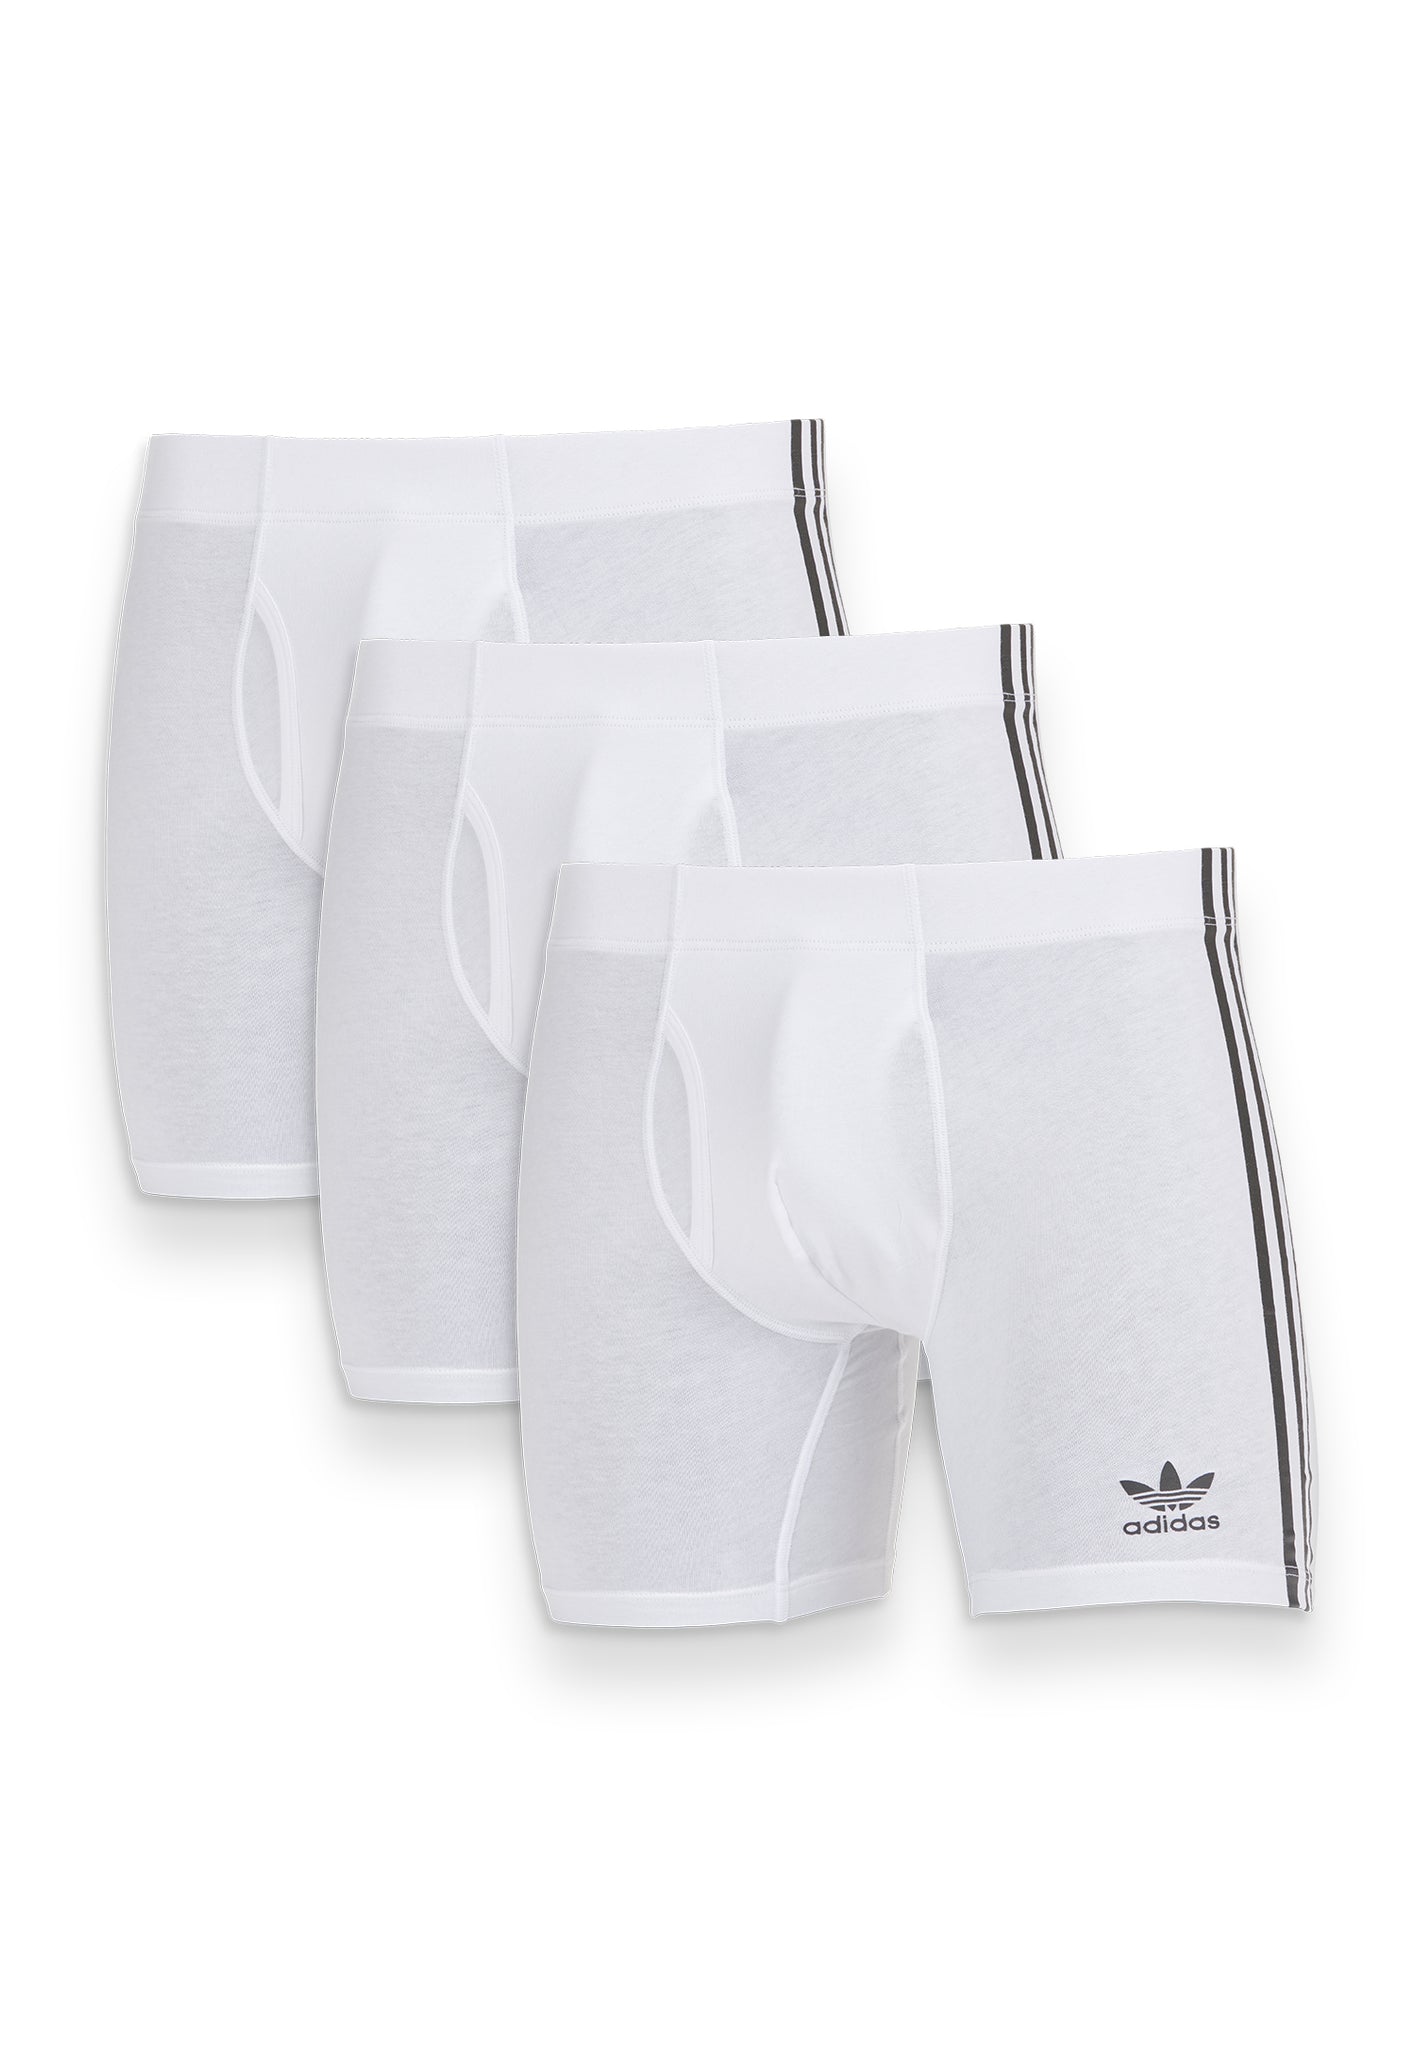 adidas Comfort Flex Cotton 3-Stripes Trunk Briefs (3 pairs) - Black |  adidas Canada